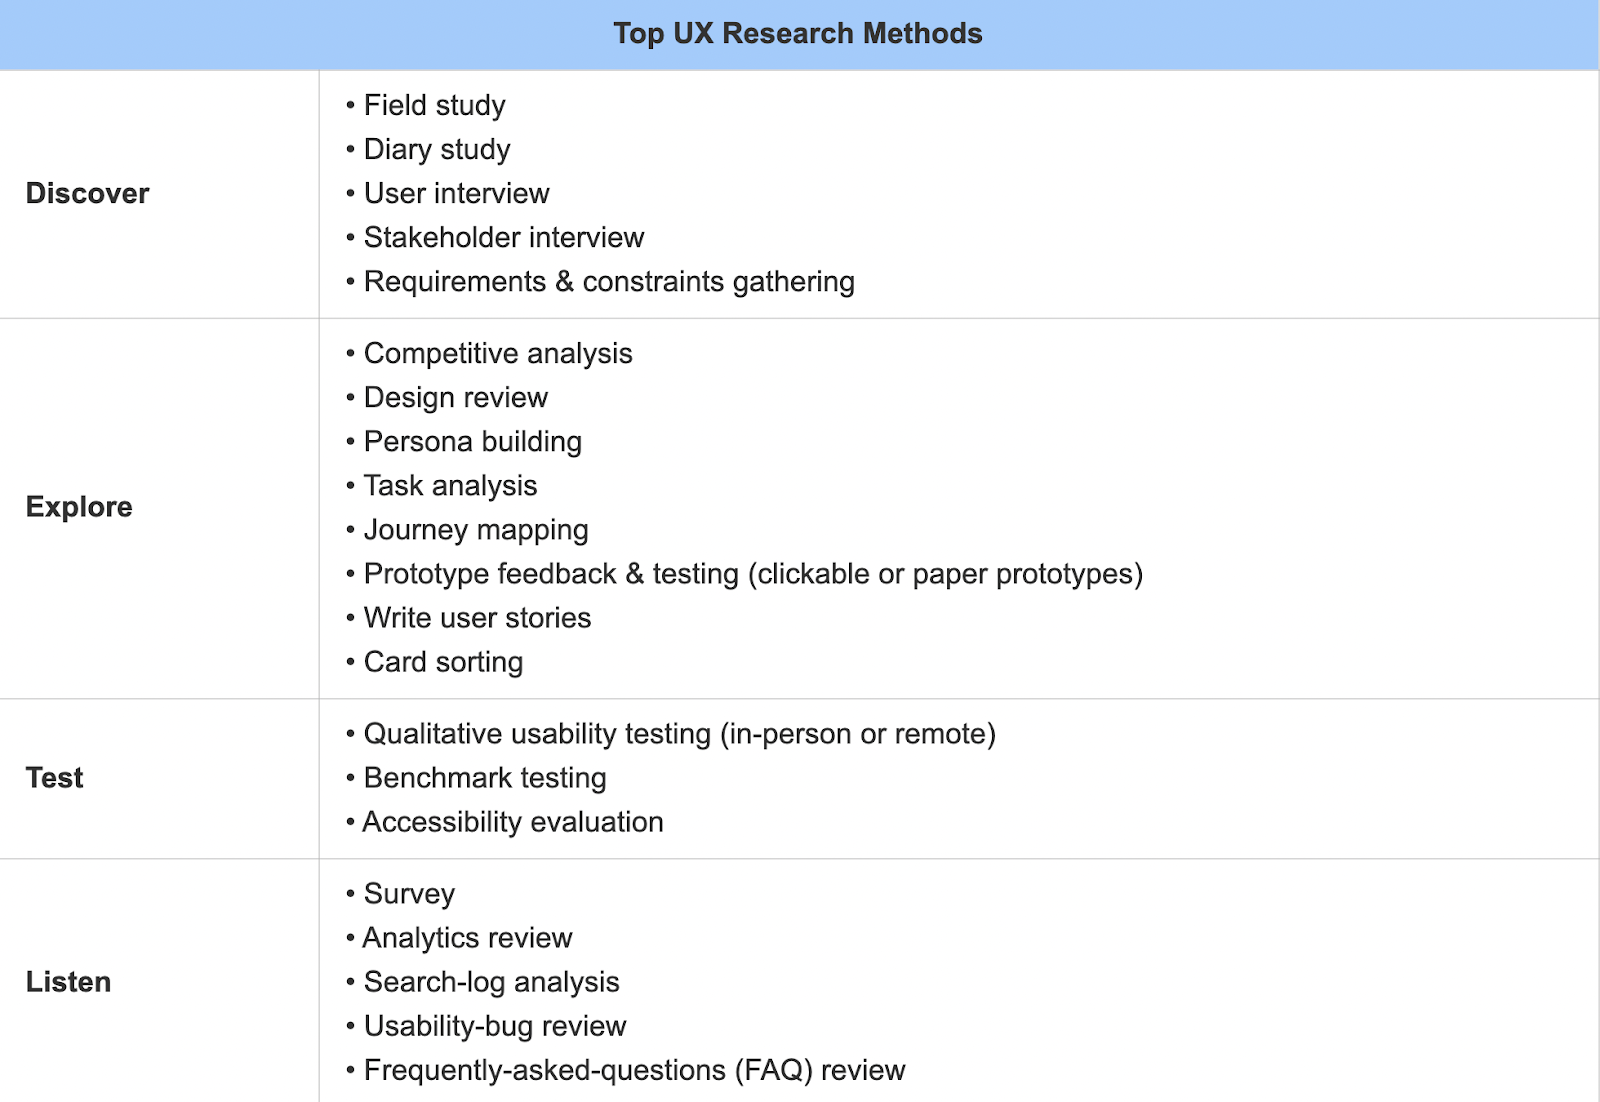 Top UX research methods